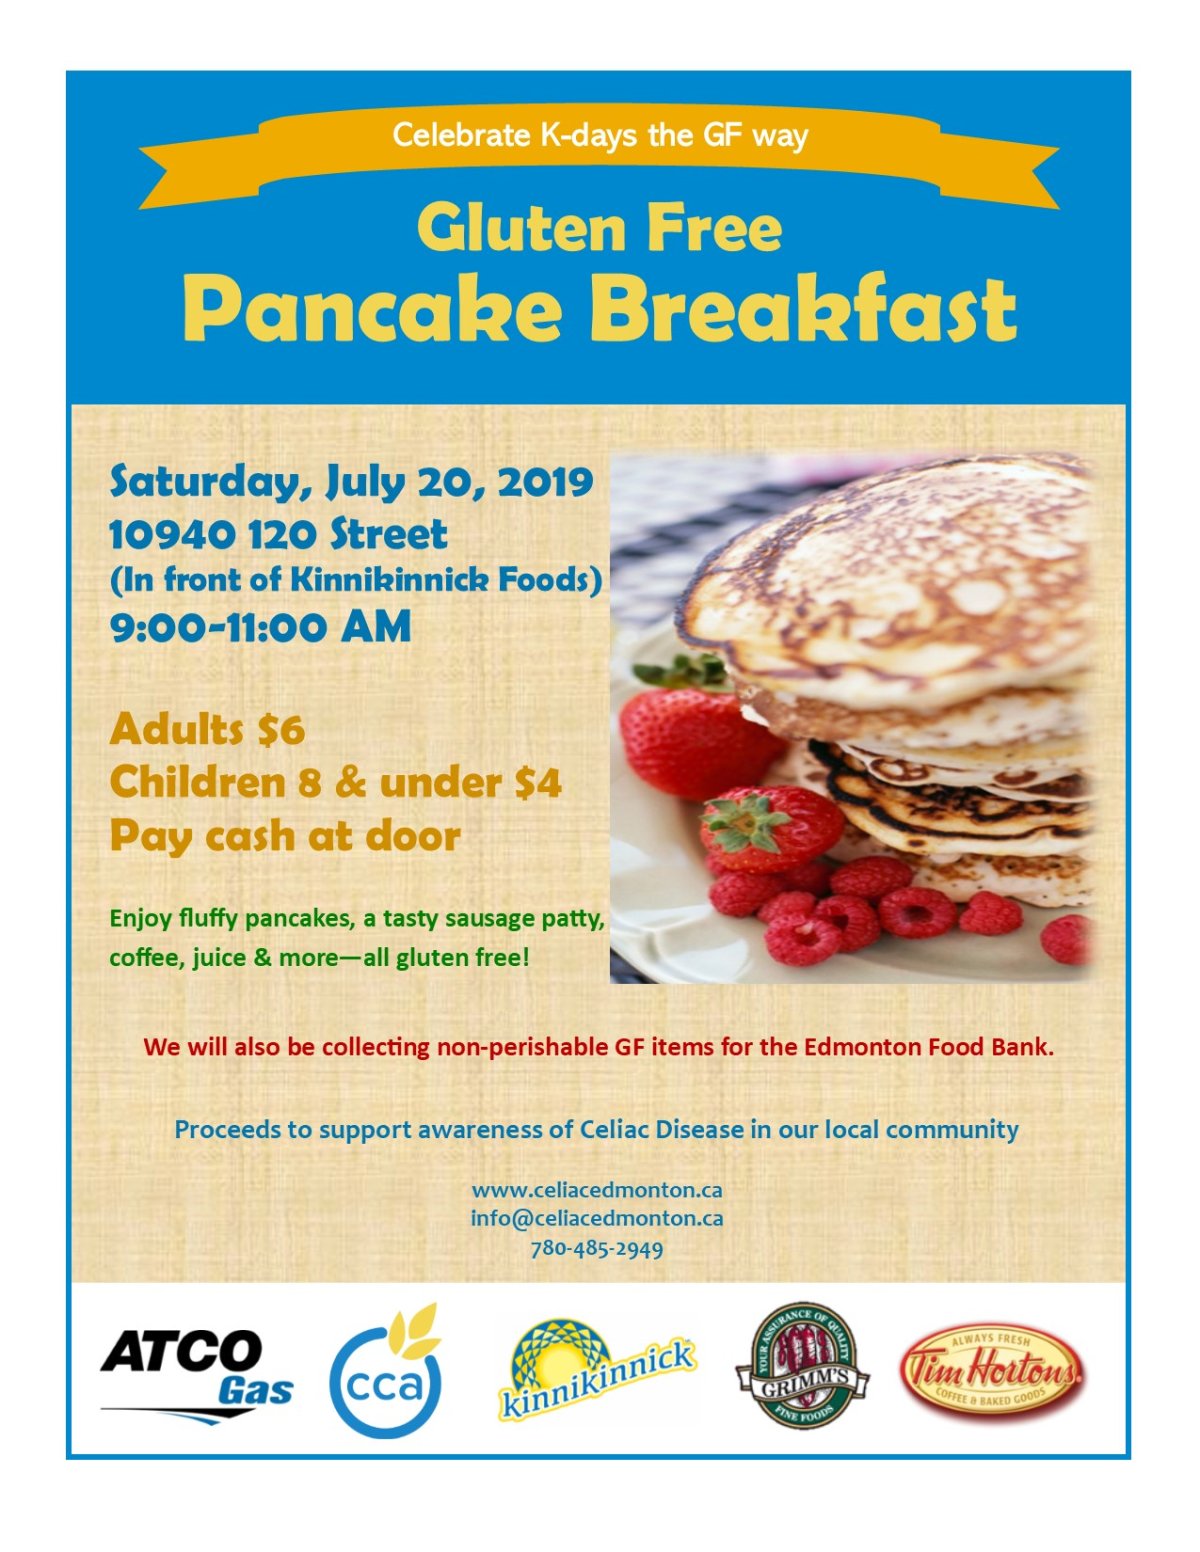 Gluten-Free Pancake Breakfast - image